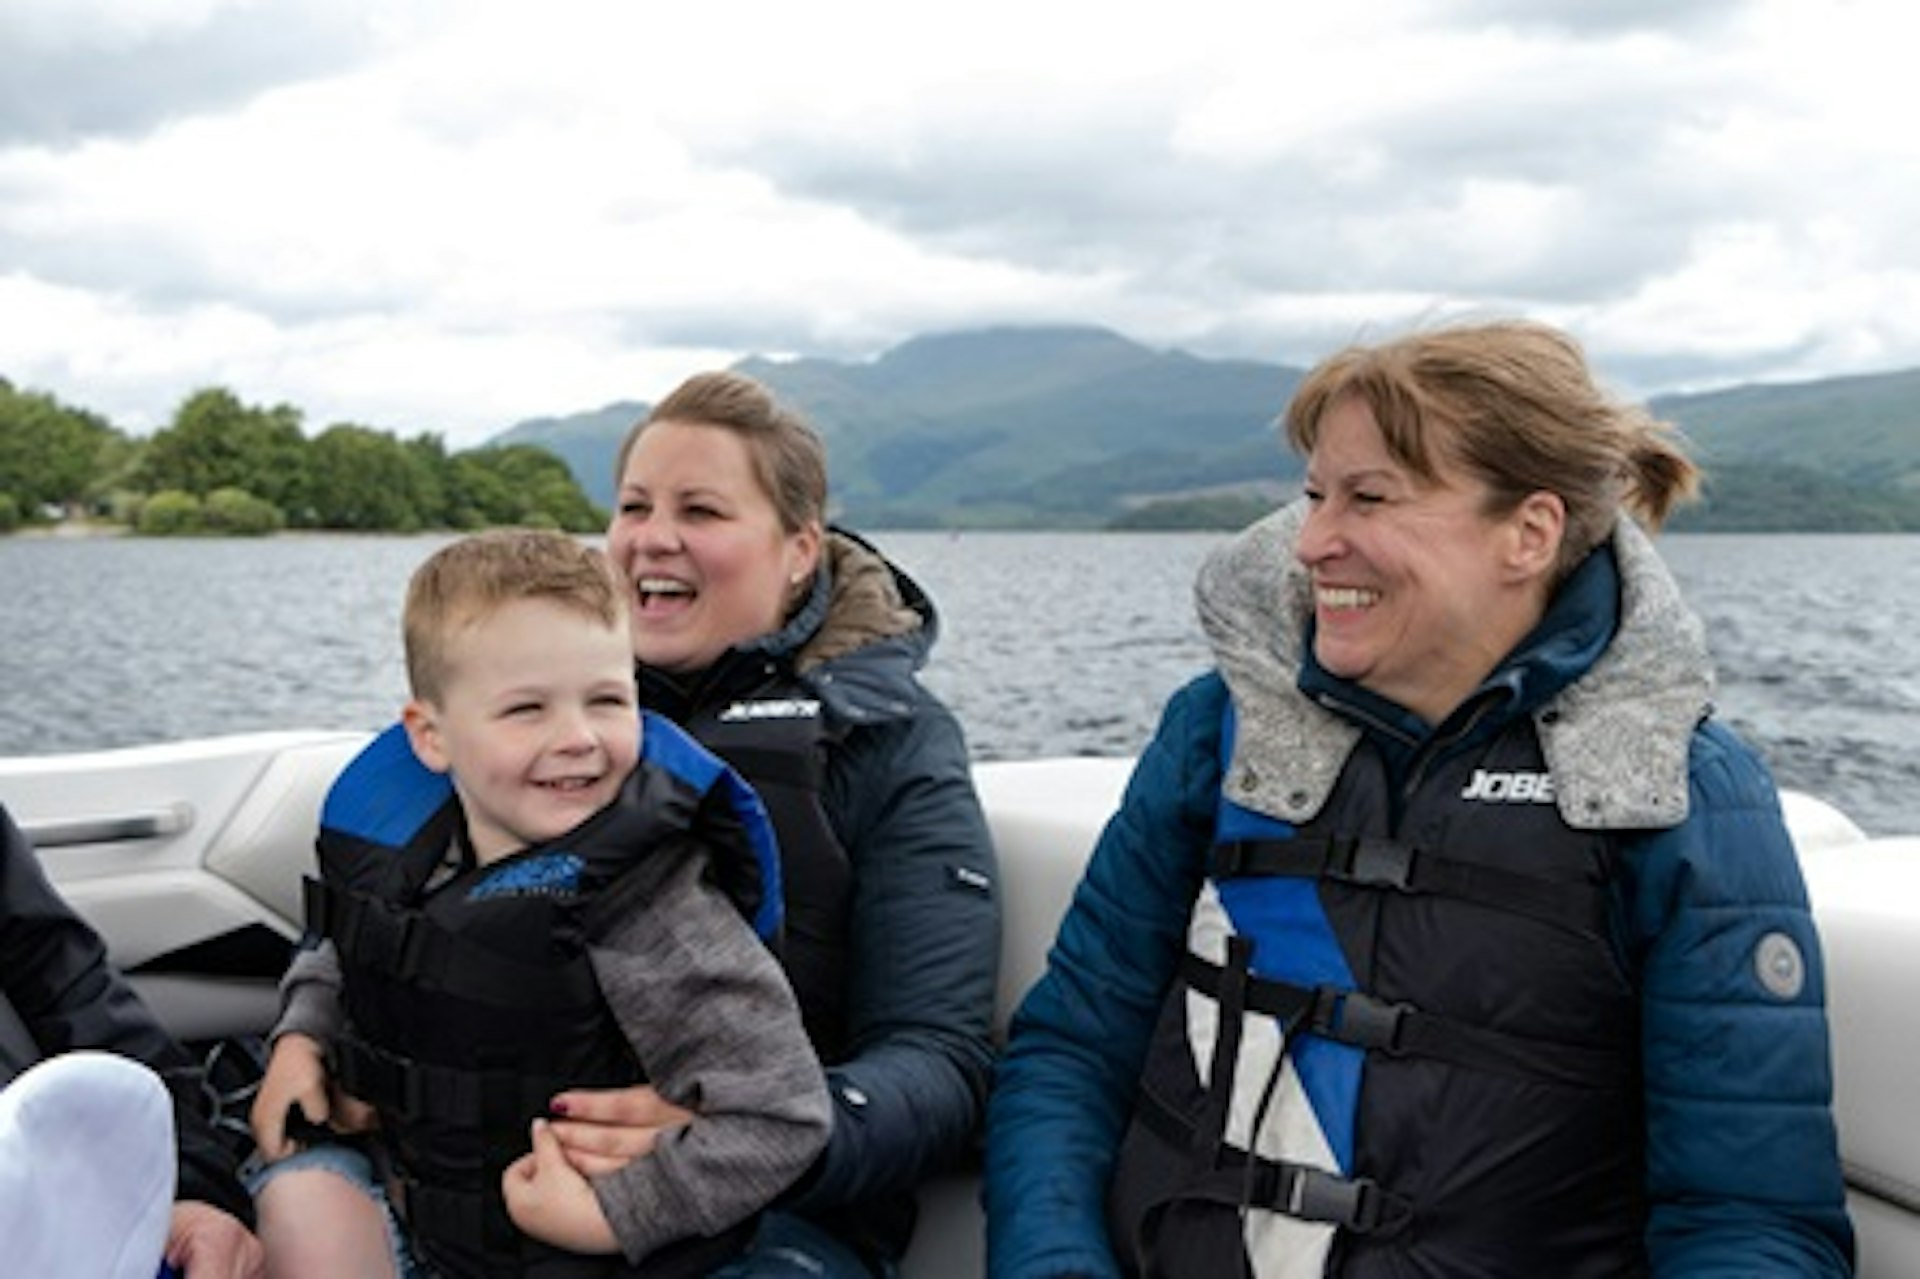 Luxury Speedboat Tour of Loch Lomond for Two 2